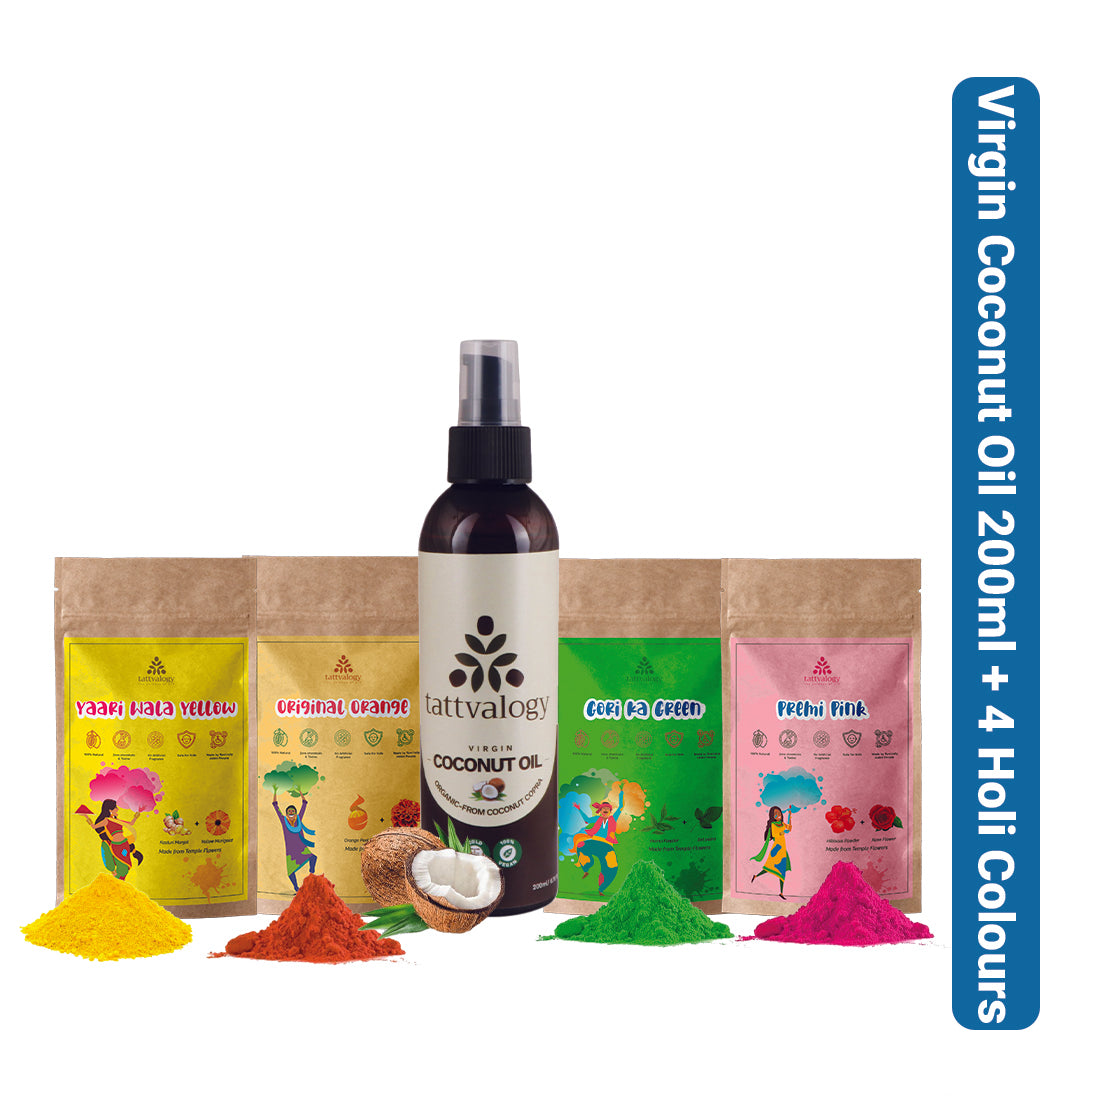 Virgin Organic Coconut Oil, 200ml + 4 x 50g Holi Colours